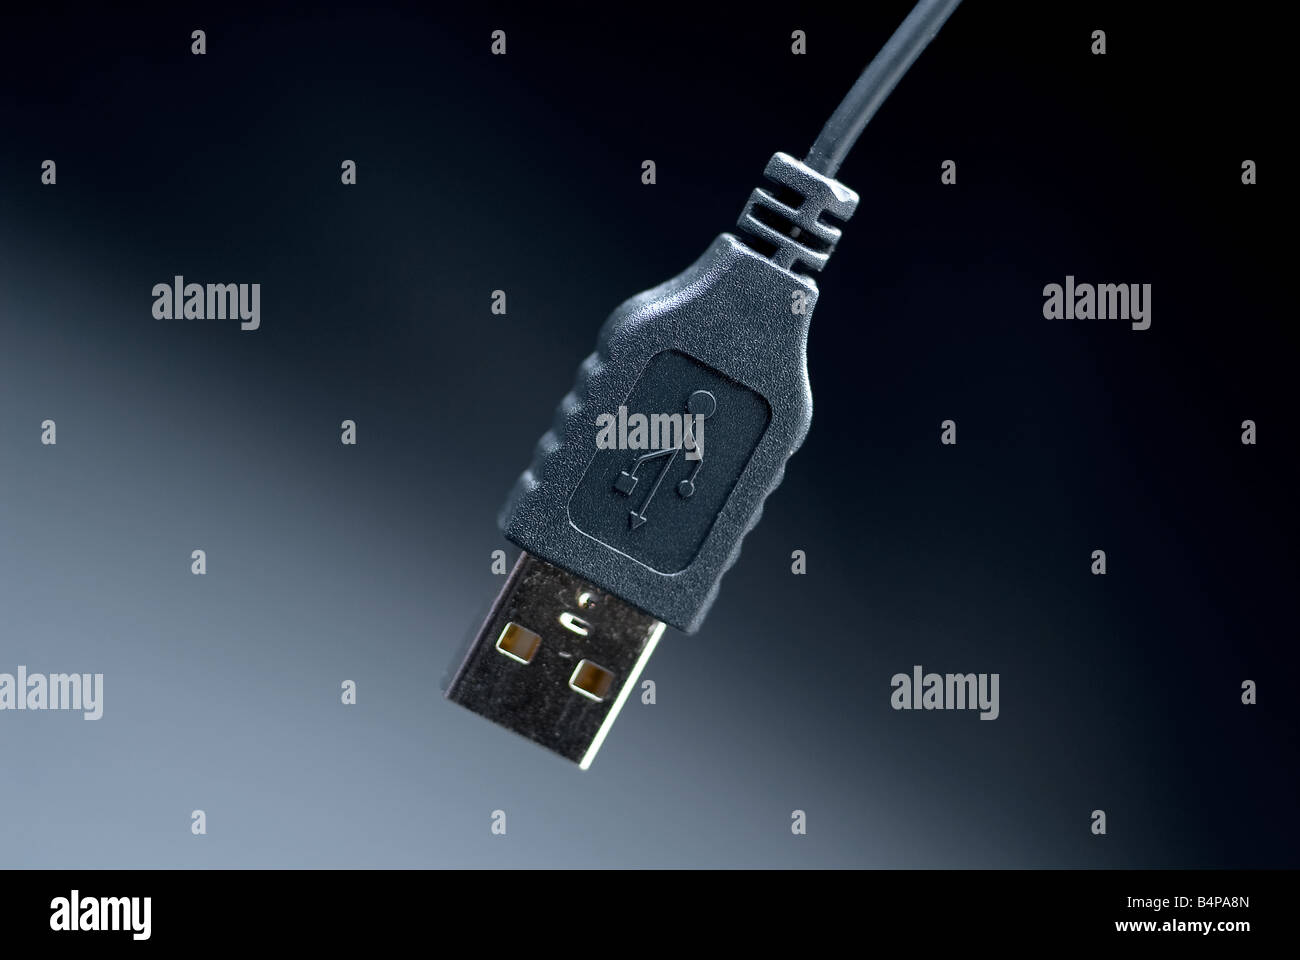 Black USB comouter cable Stock Photo